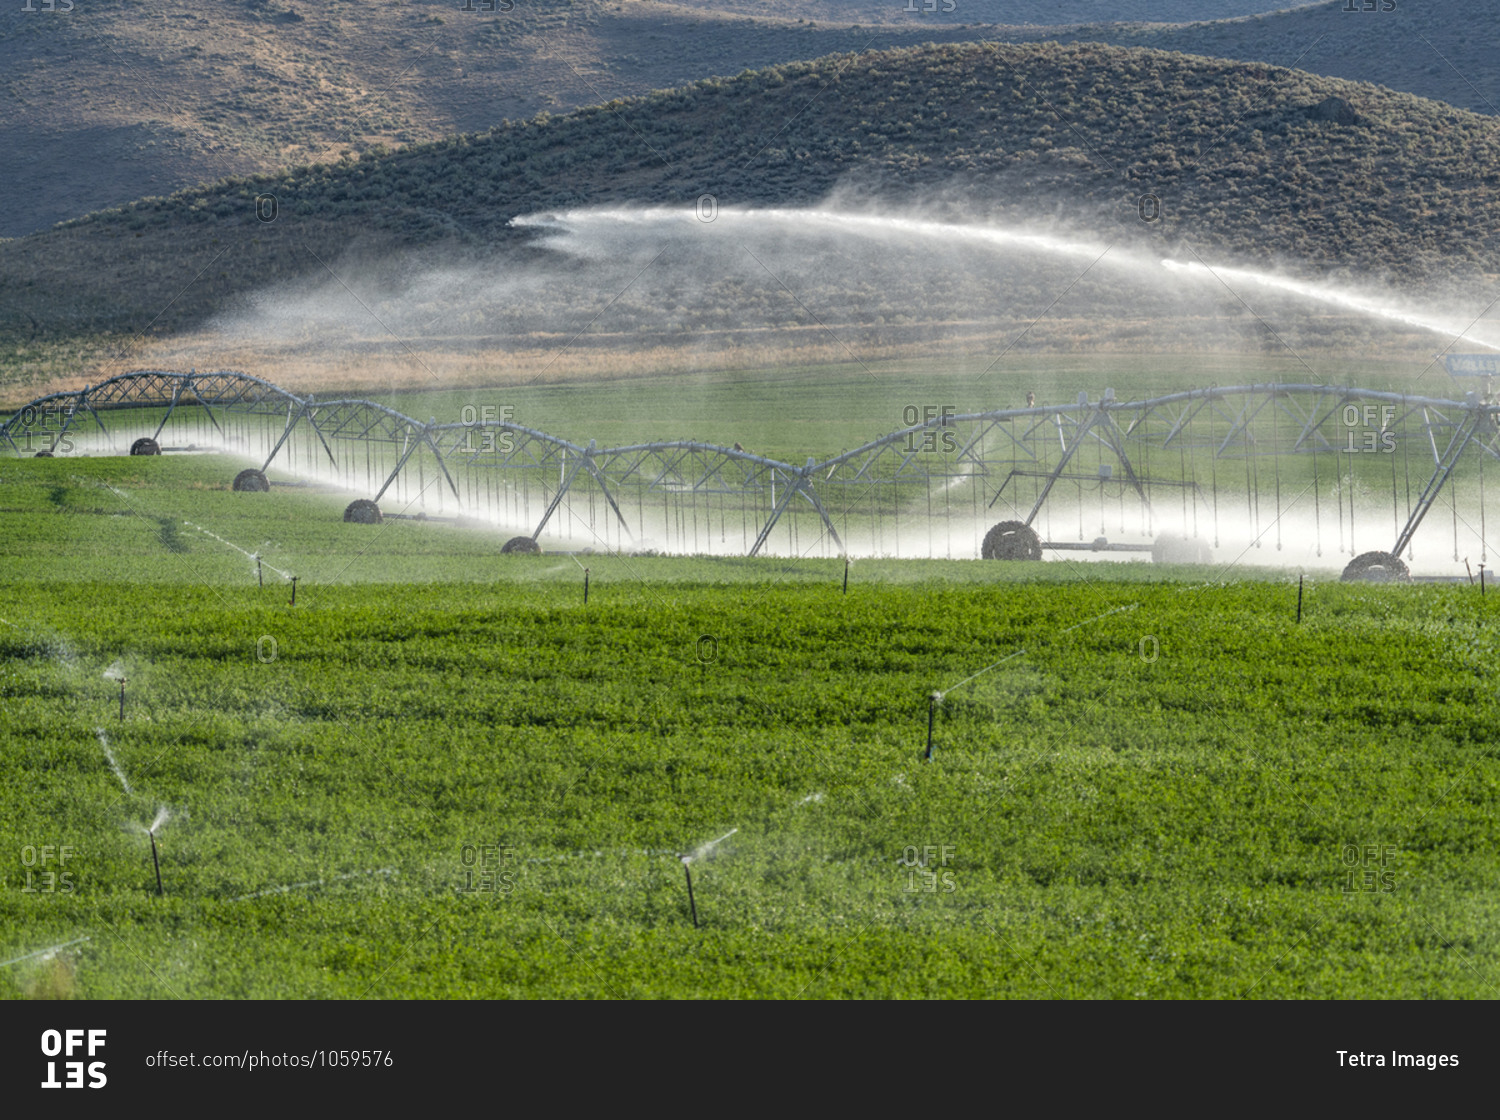 USA, Idaho, Bellevue, Center pivot irrigation system sprinkling water in field